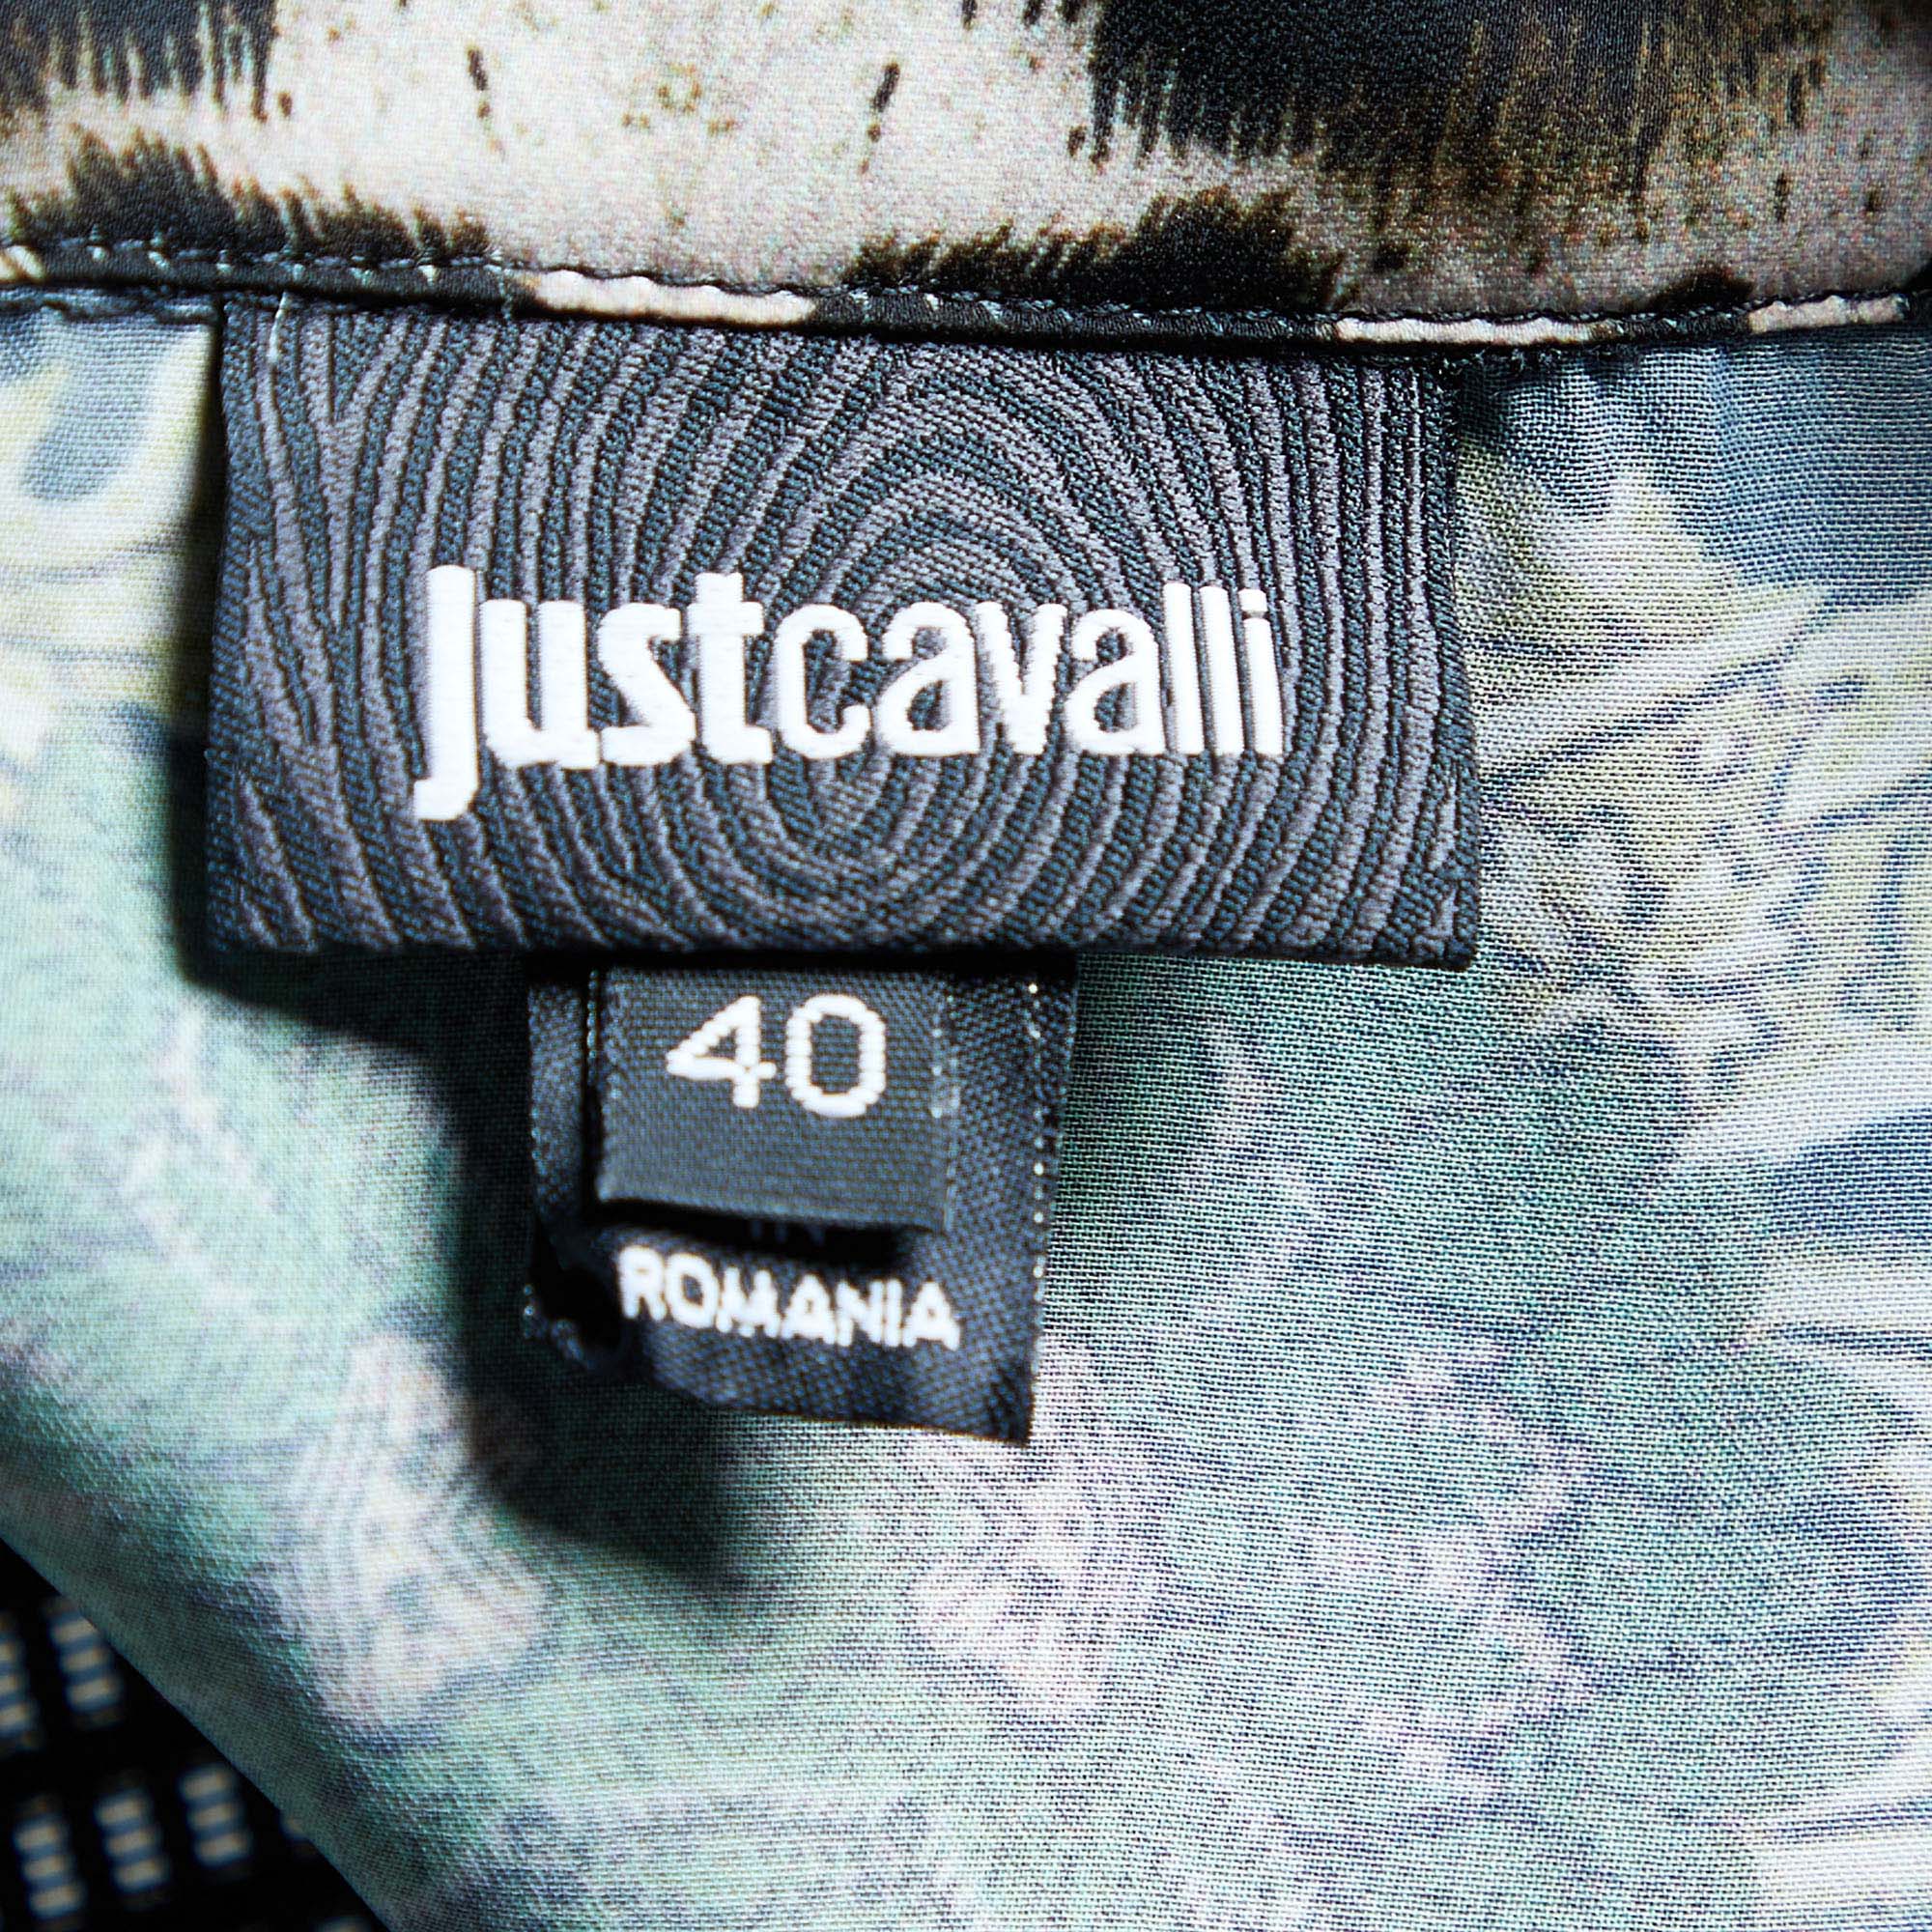 Just Cavalli Black Printed Satin Button Front Shirt M